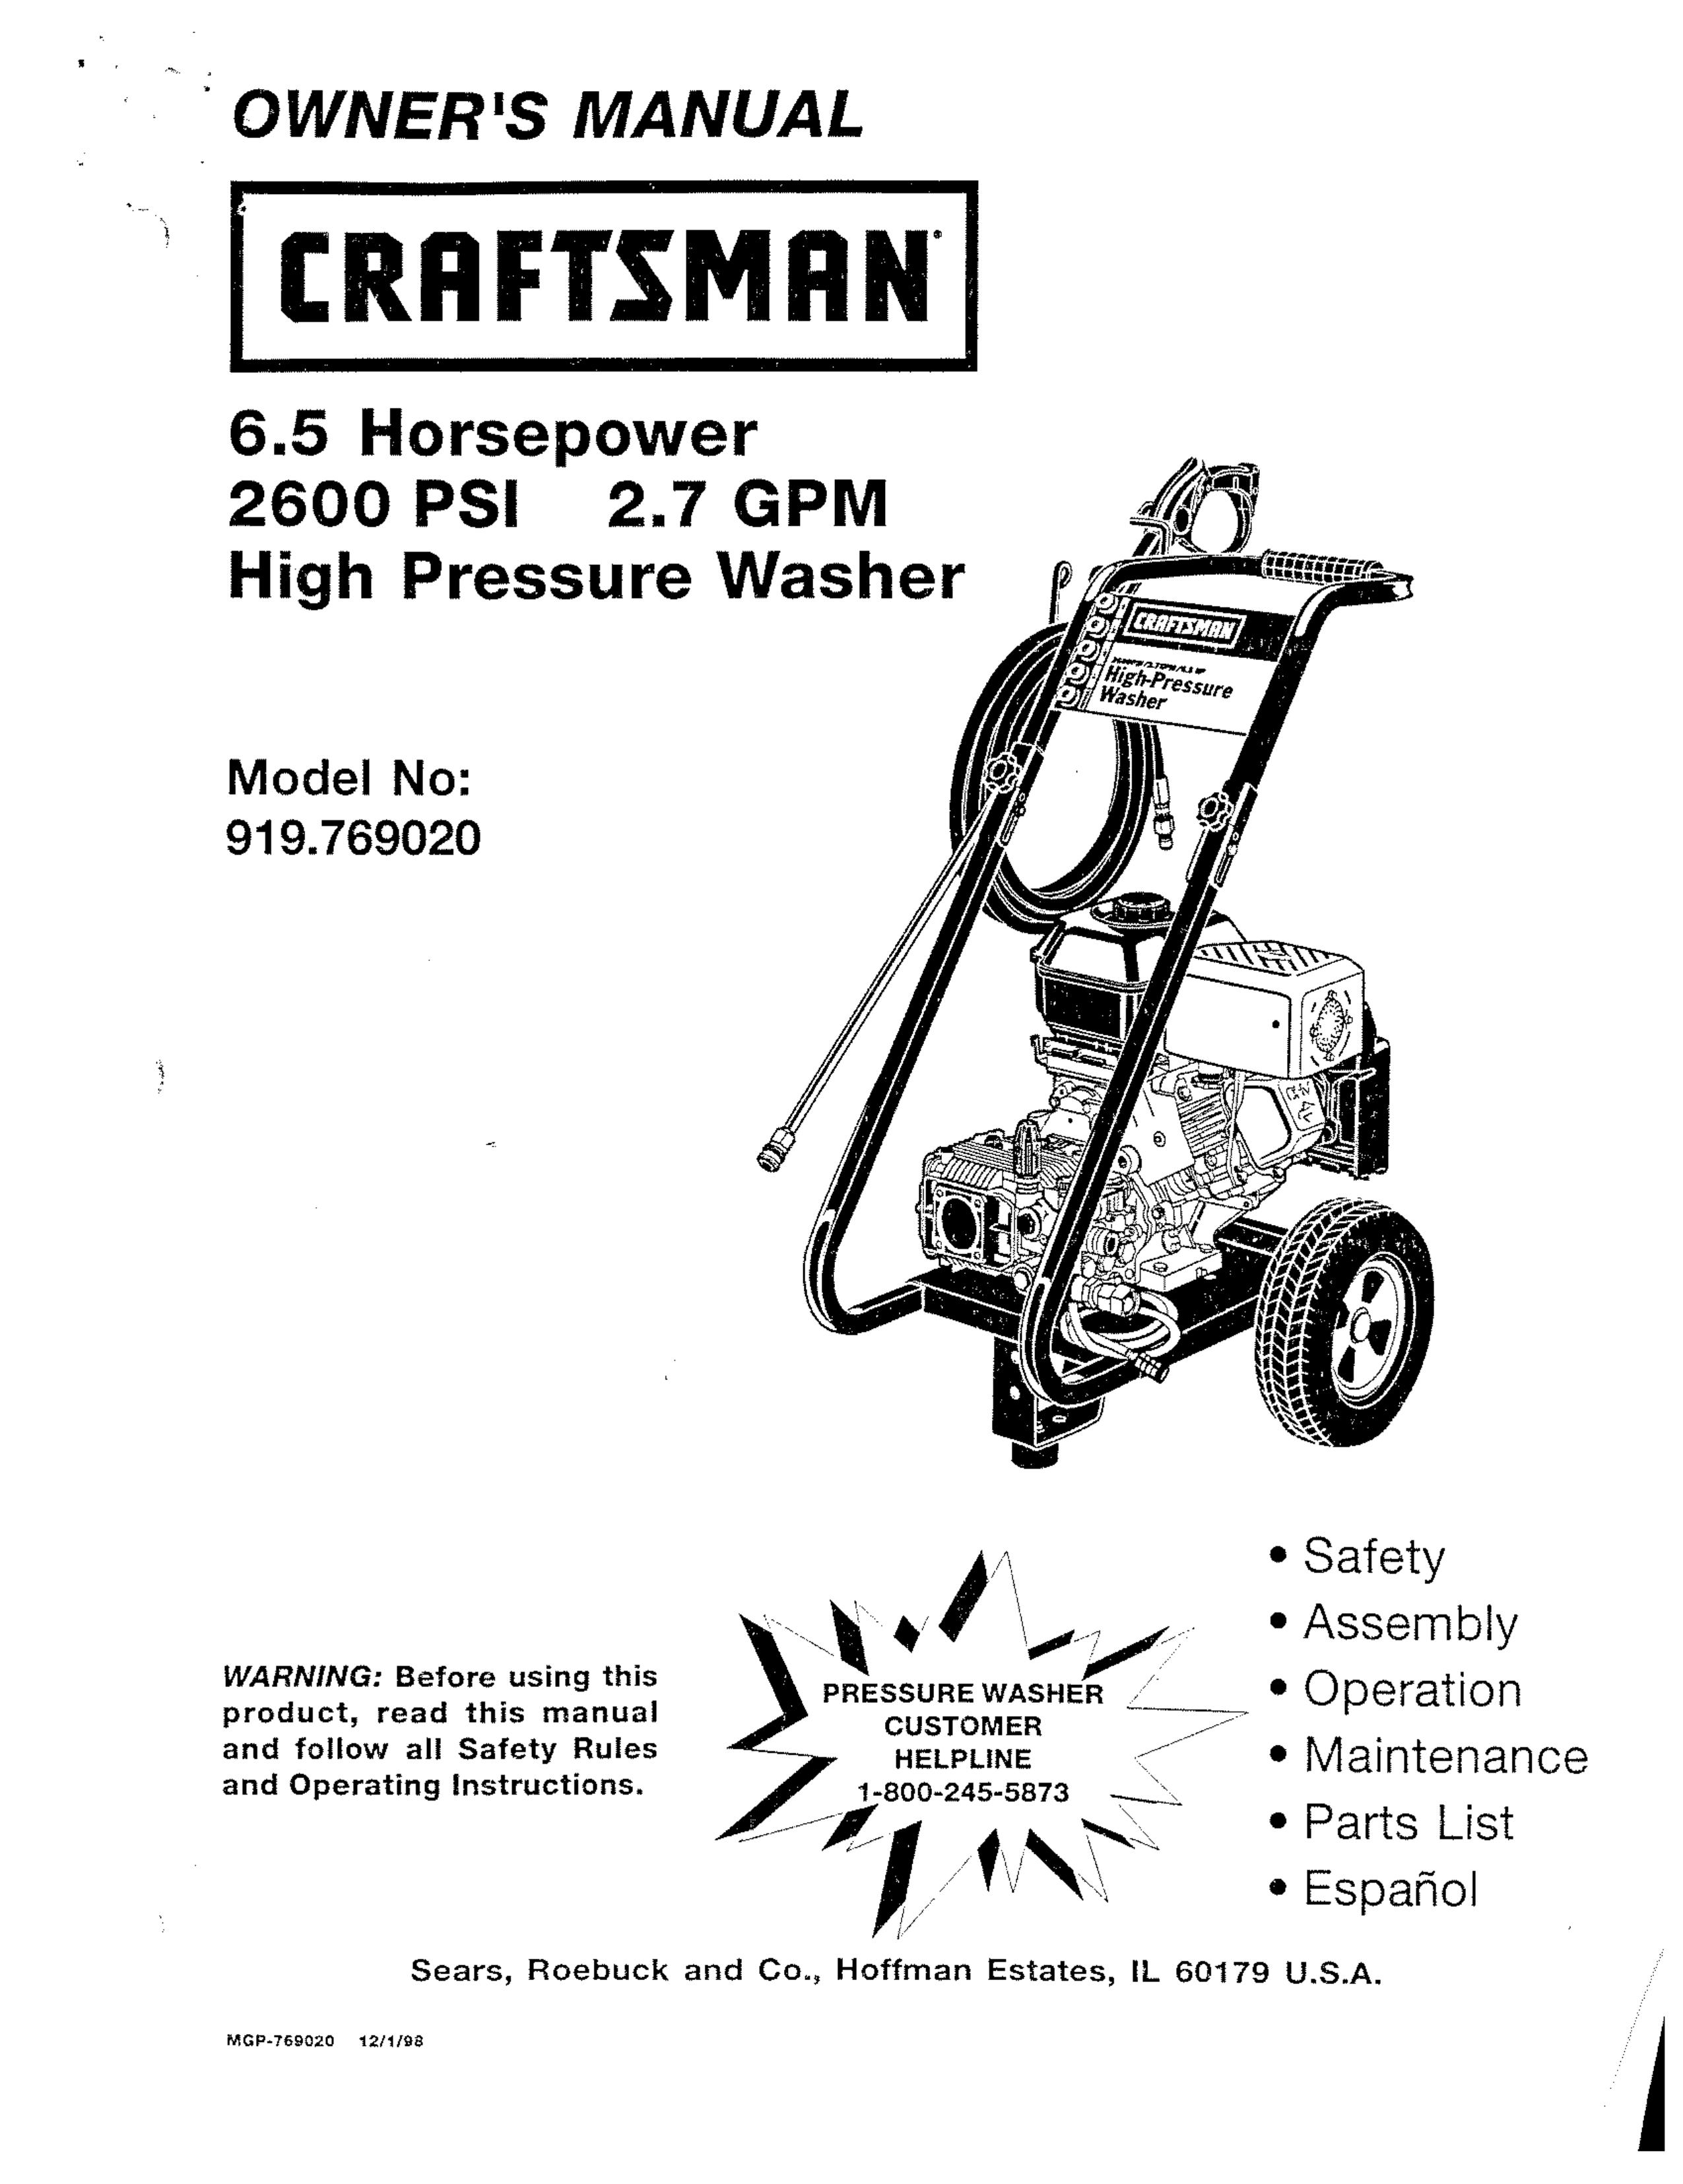 Craftsman 919.769020 Pressure Washer User Manual